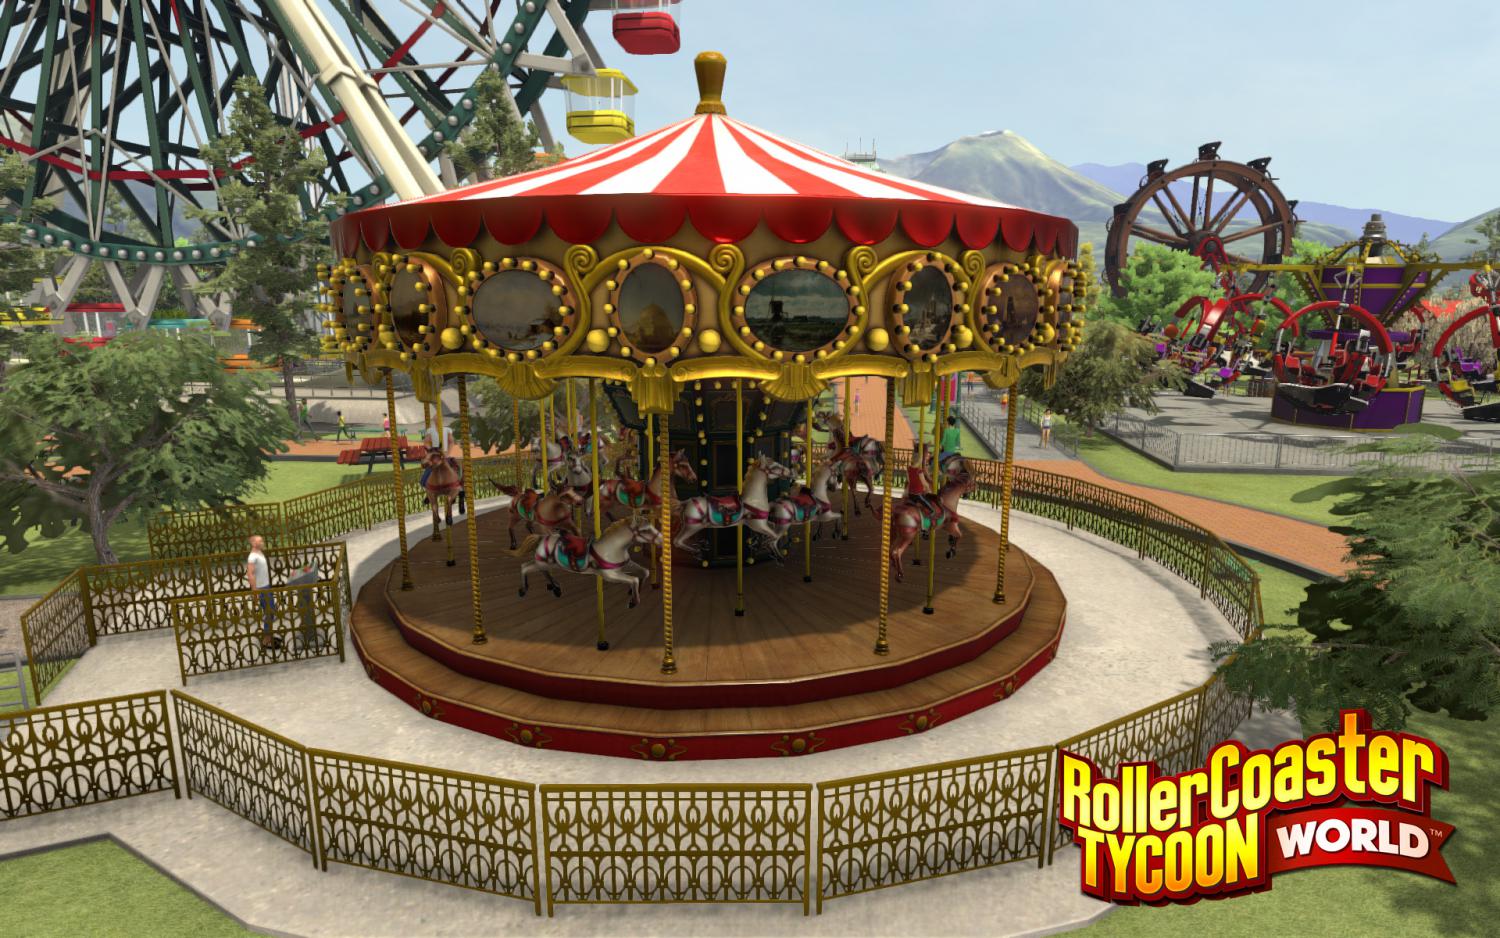 RollerCoaster Tycoon World™